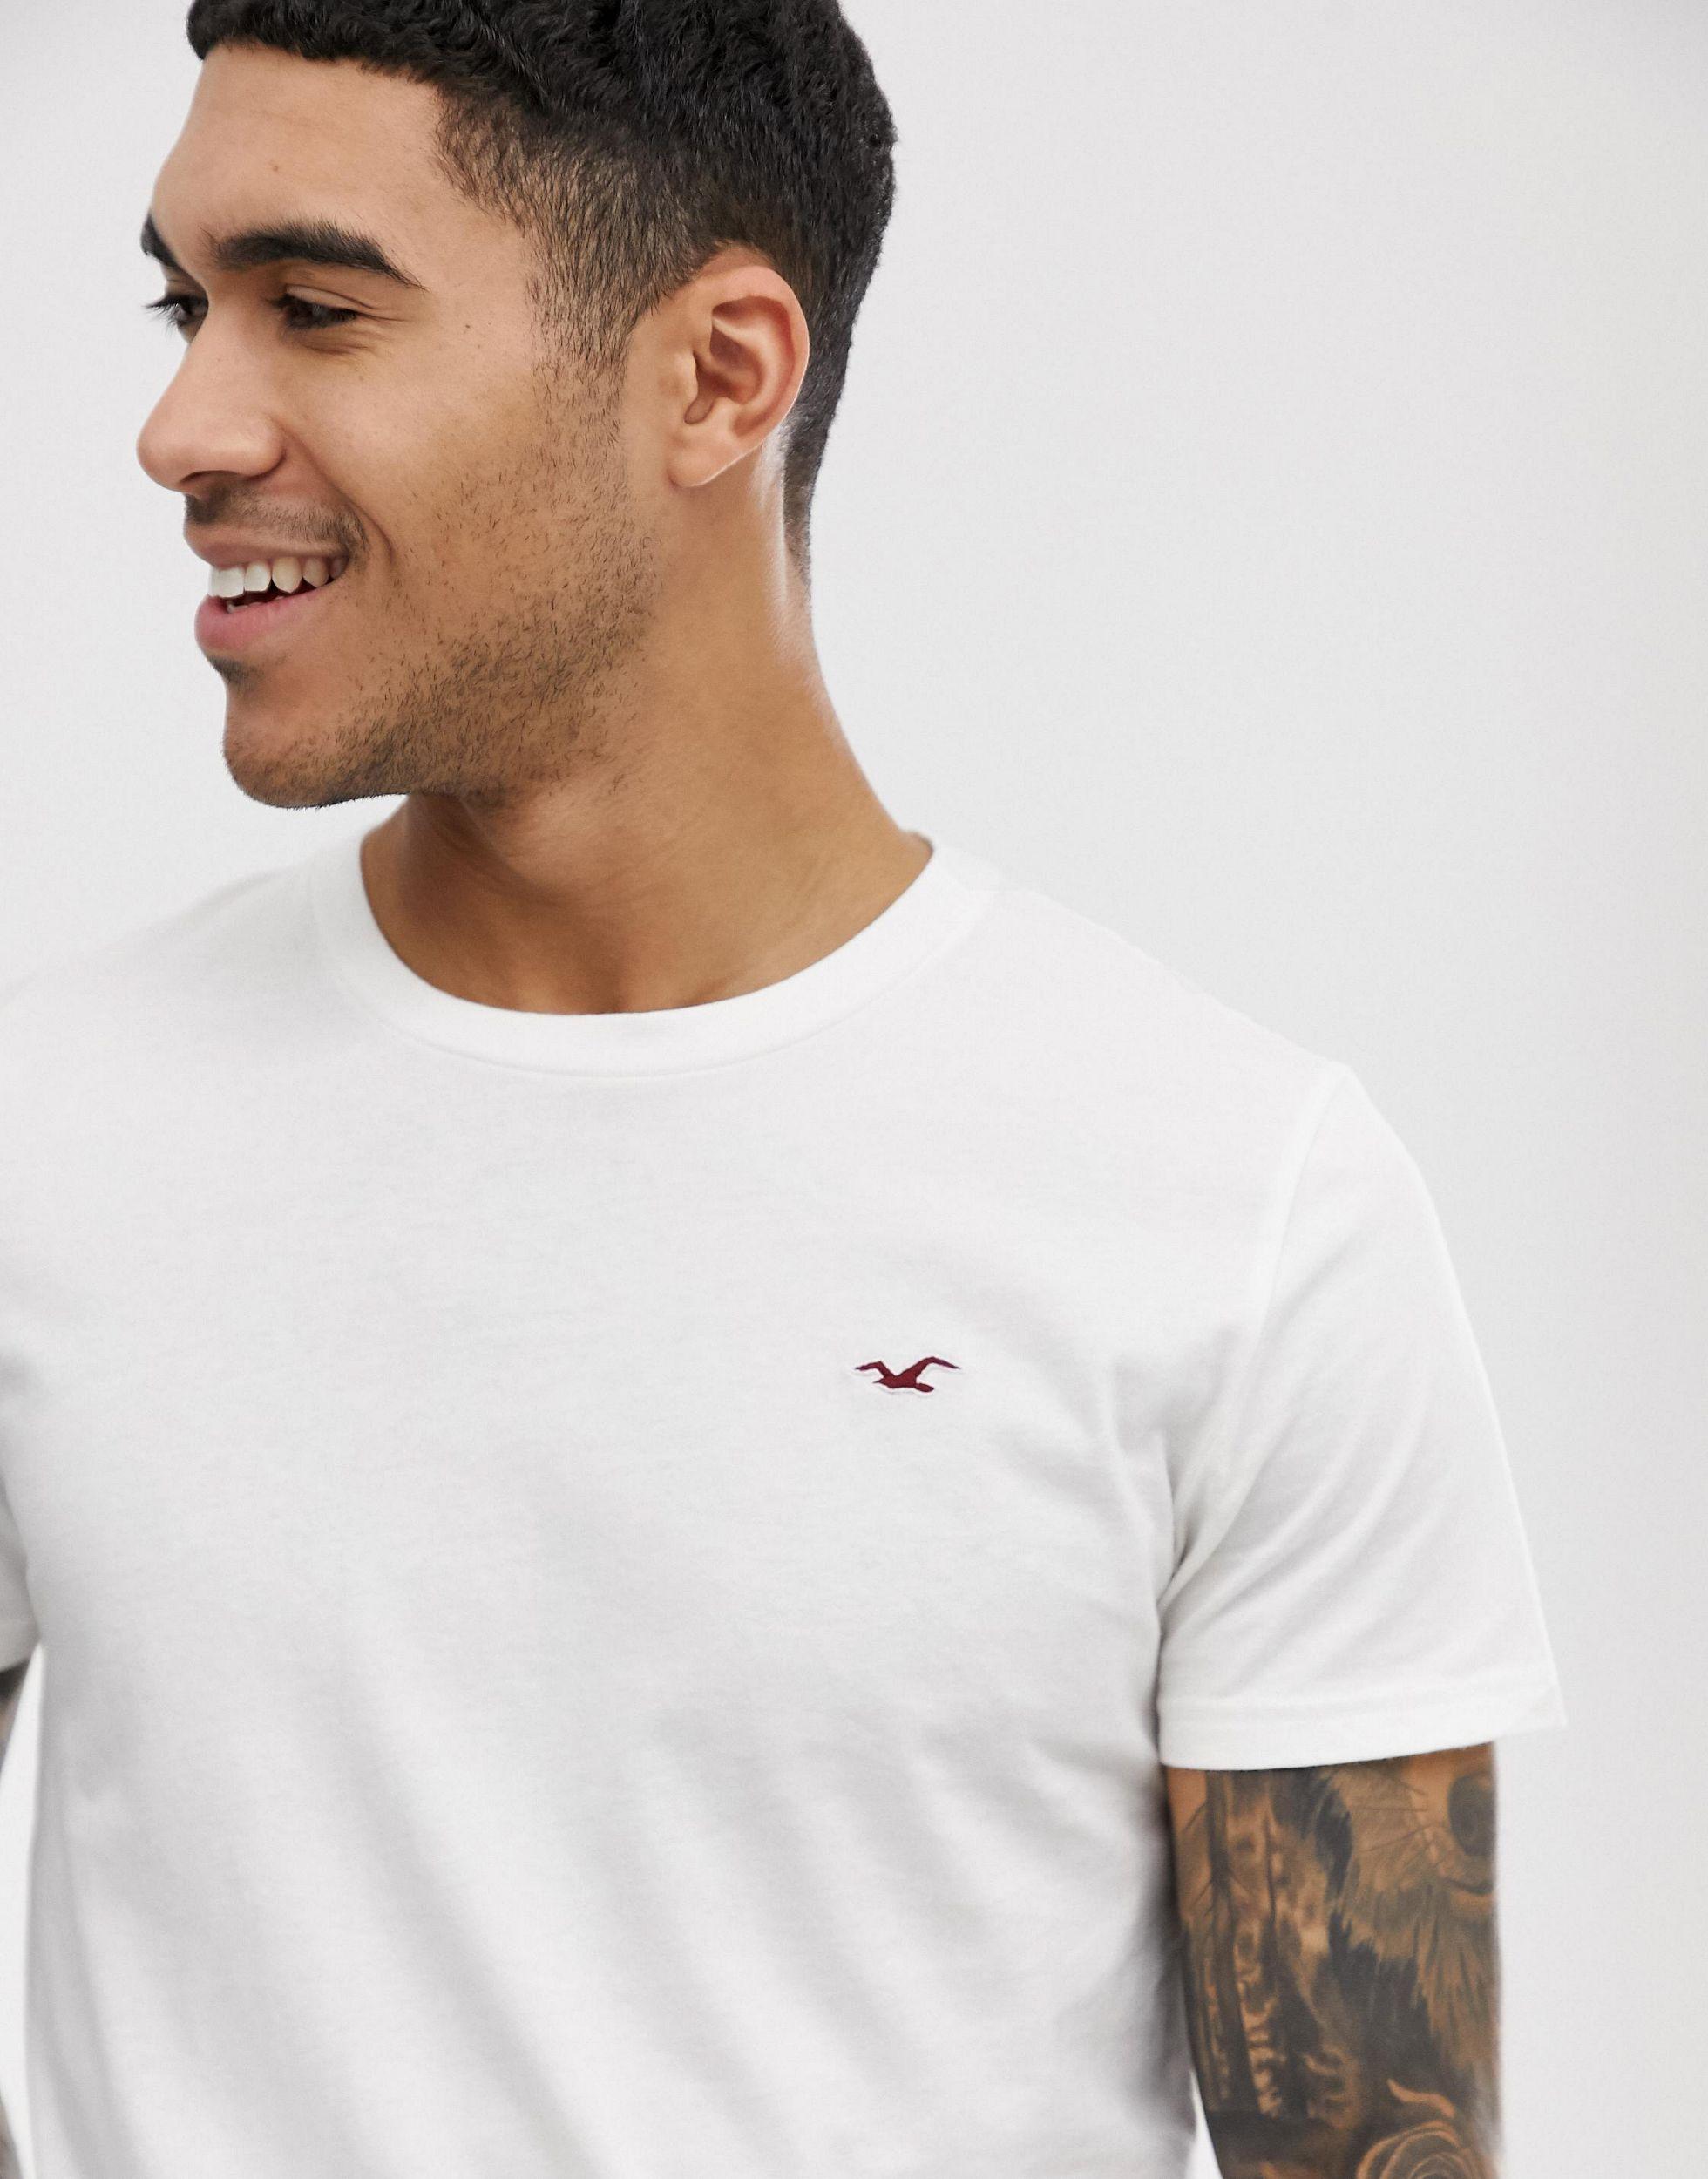 Hollister Men's Crew Neck T-Shirt (White): Buy Online at Best